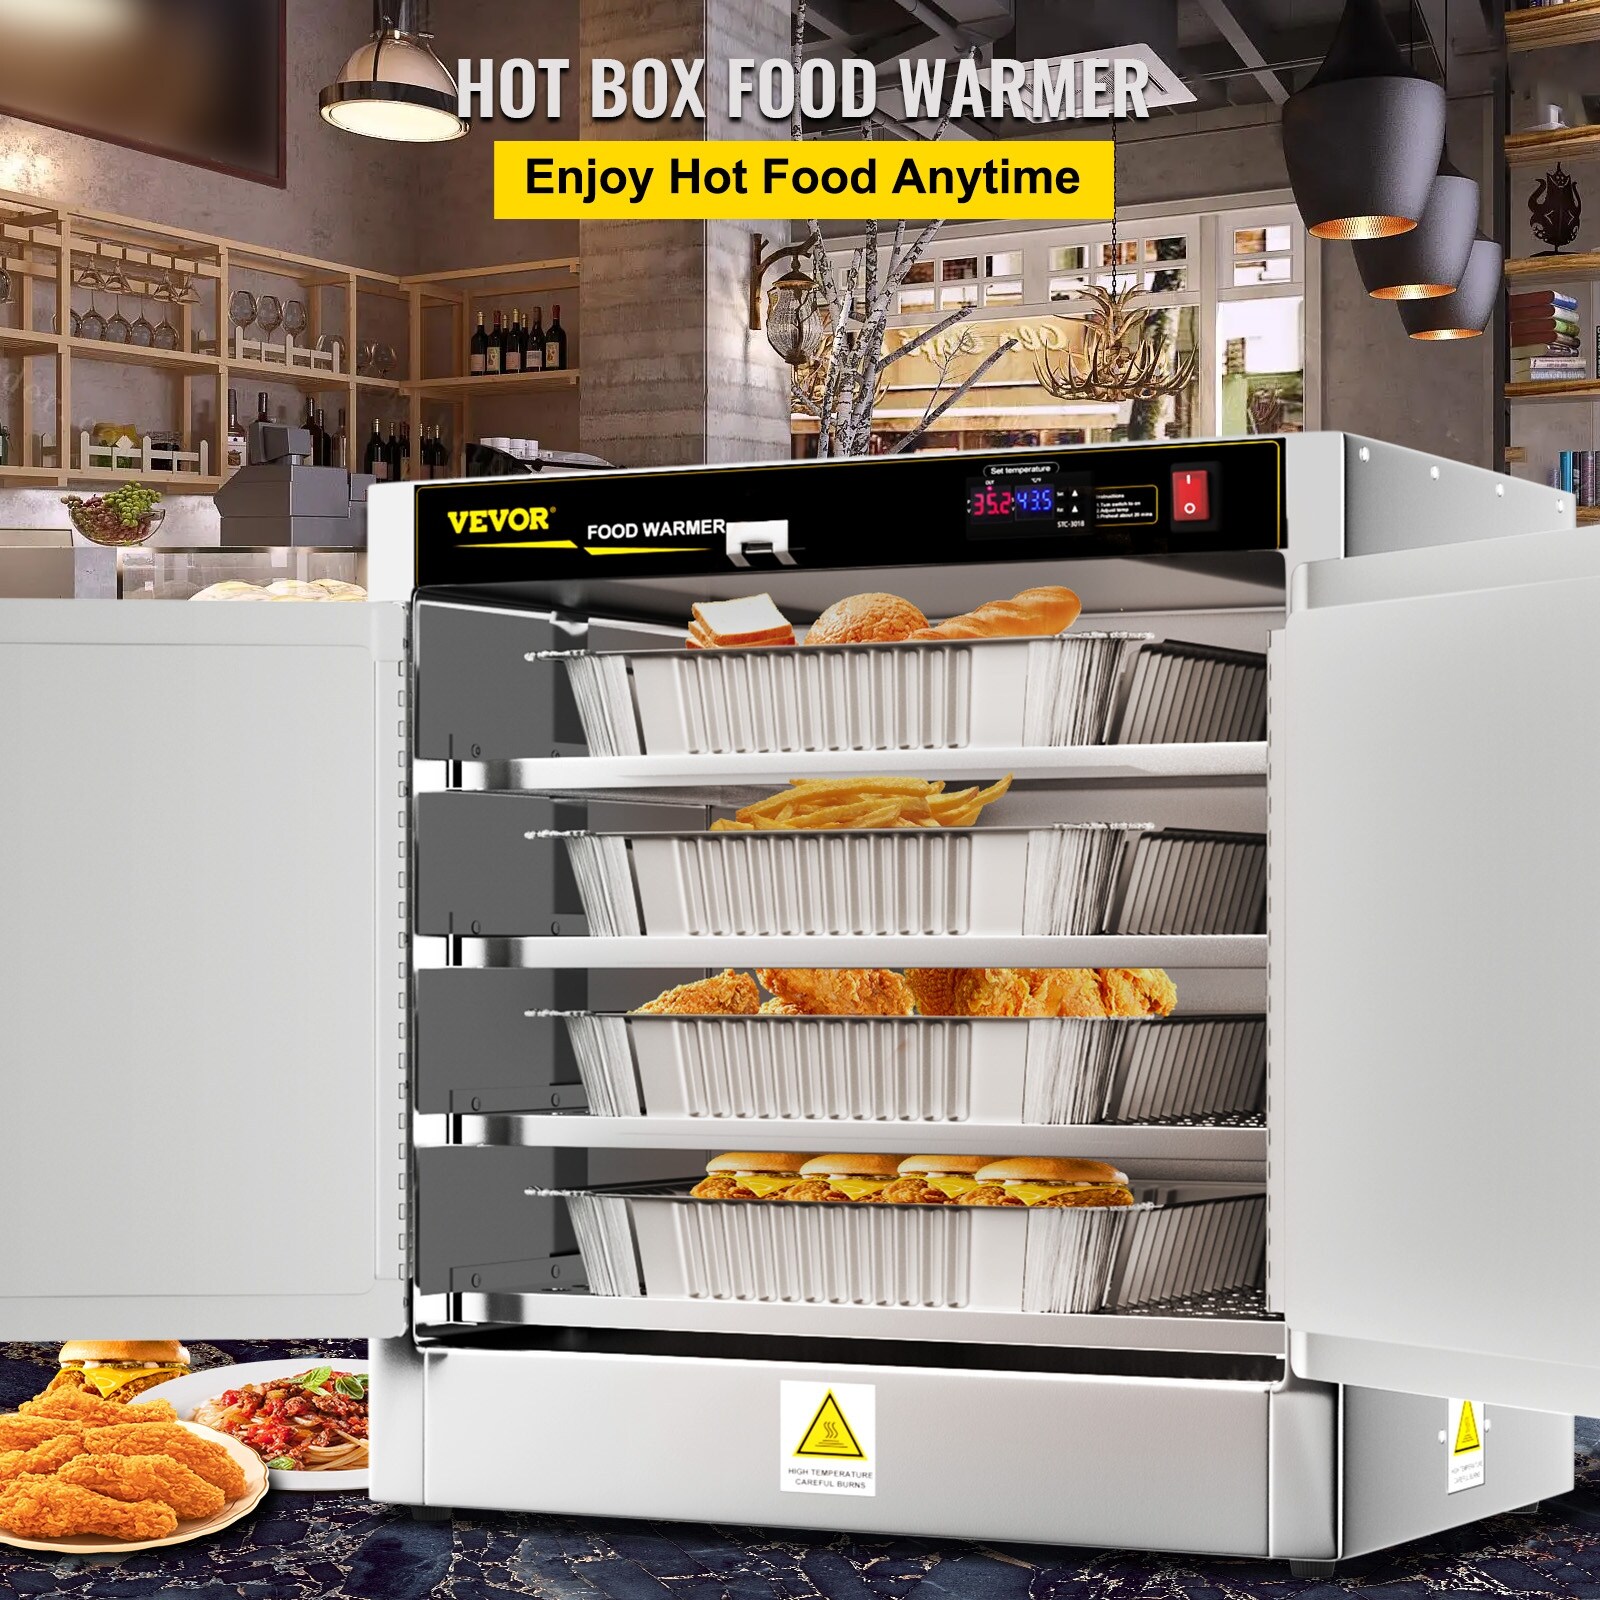 VEVOR Hot Box Food Warmer, 19x19x29 Concession Warmer with